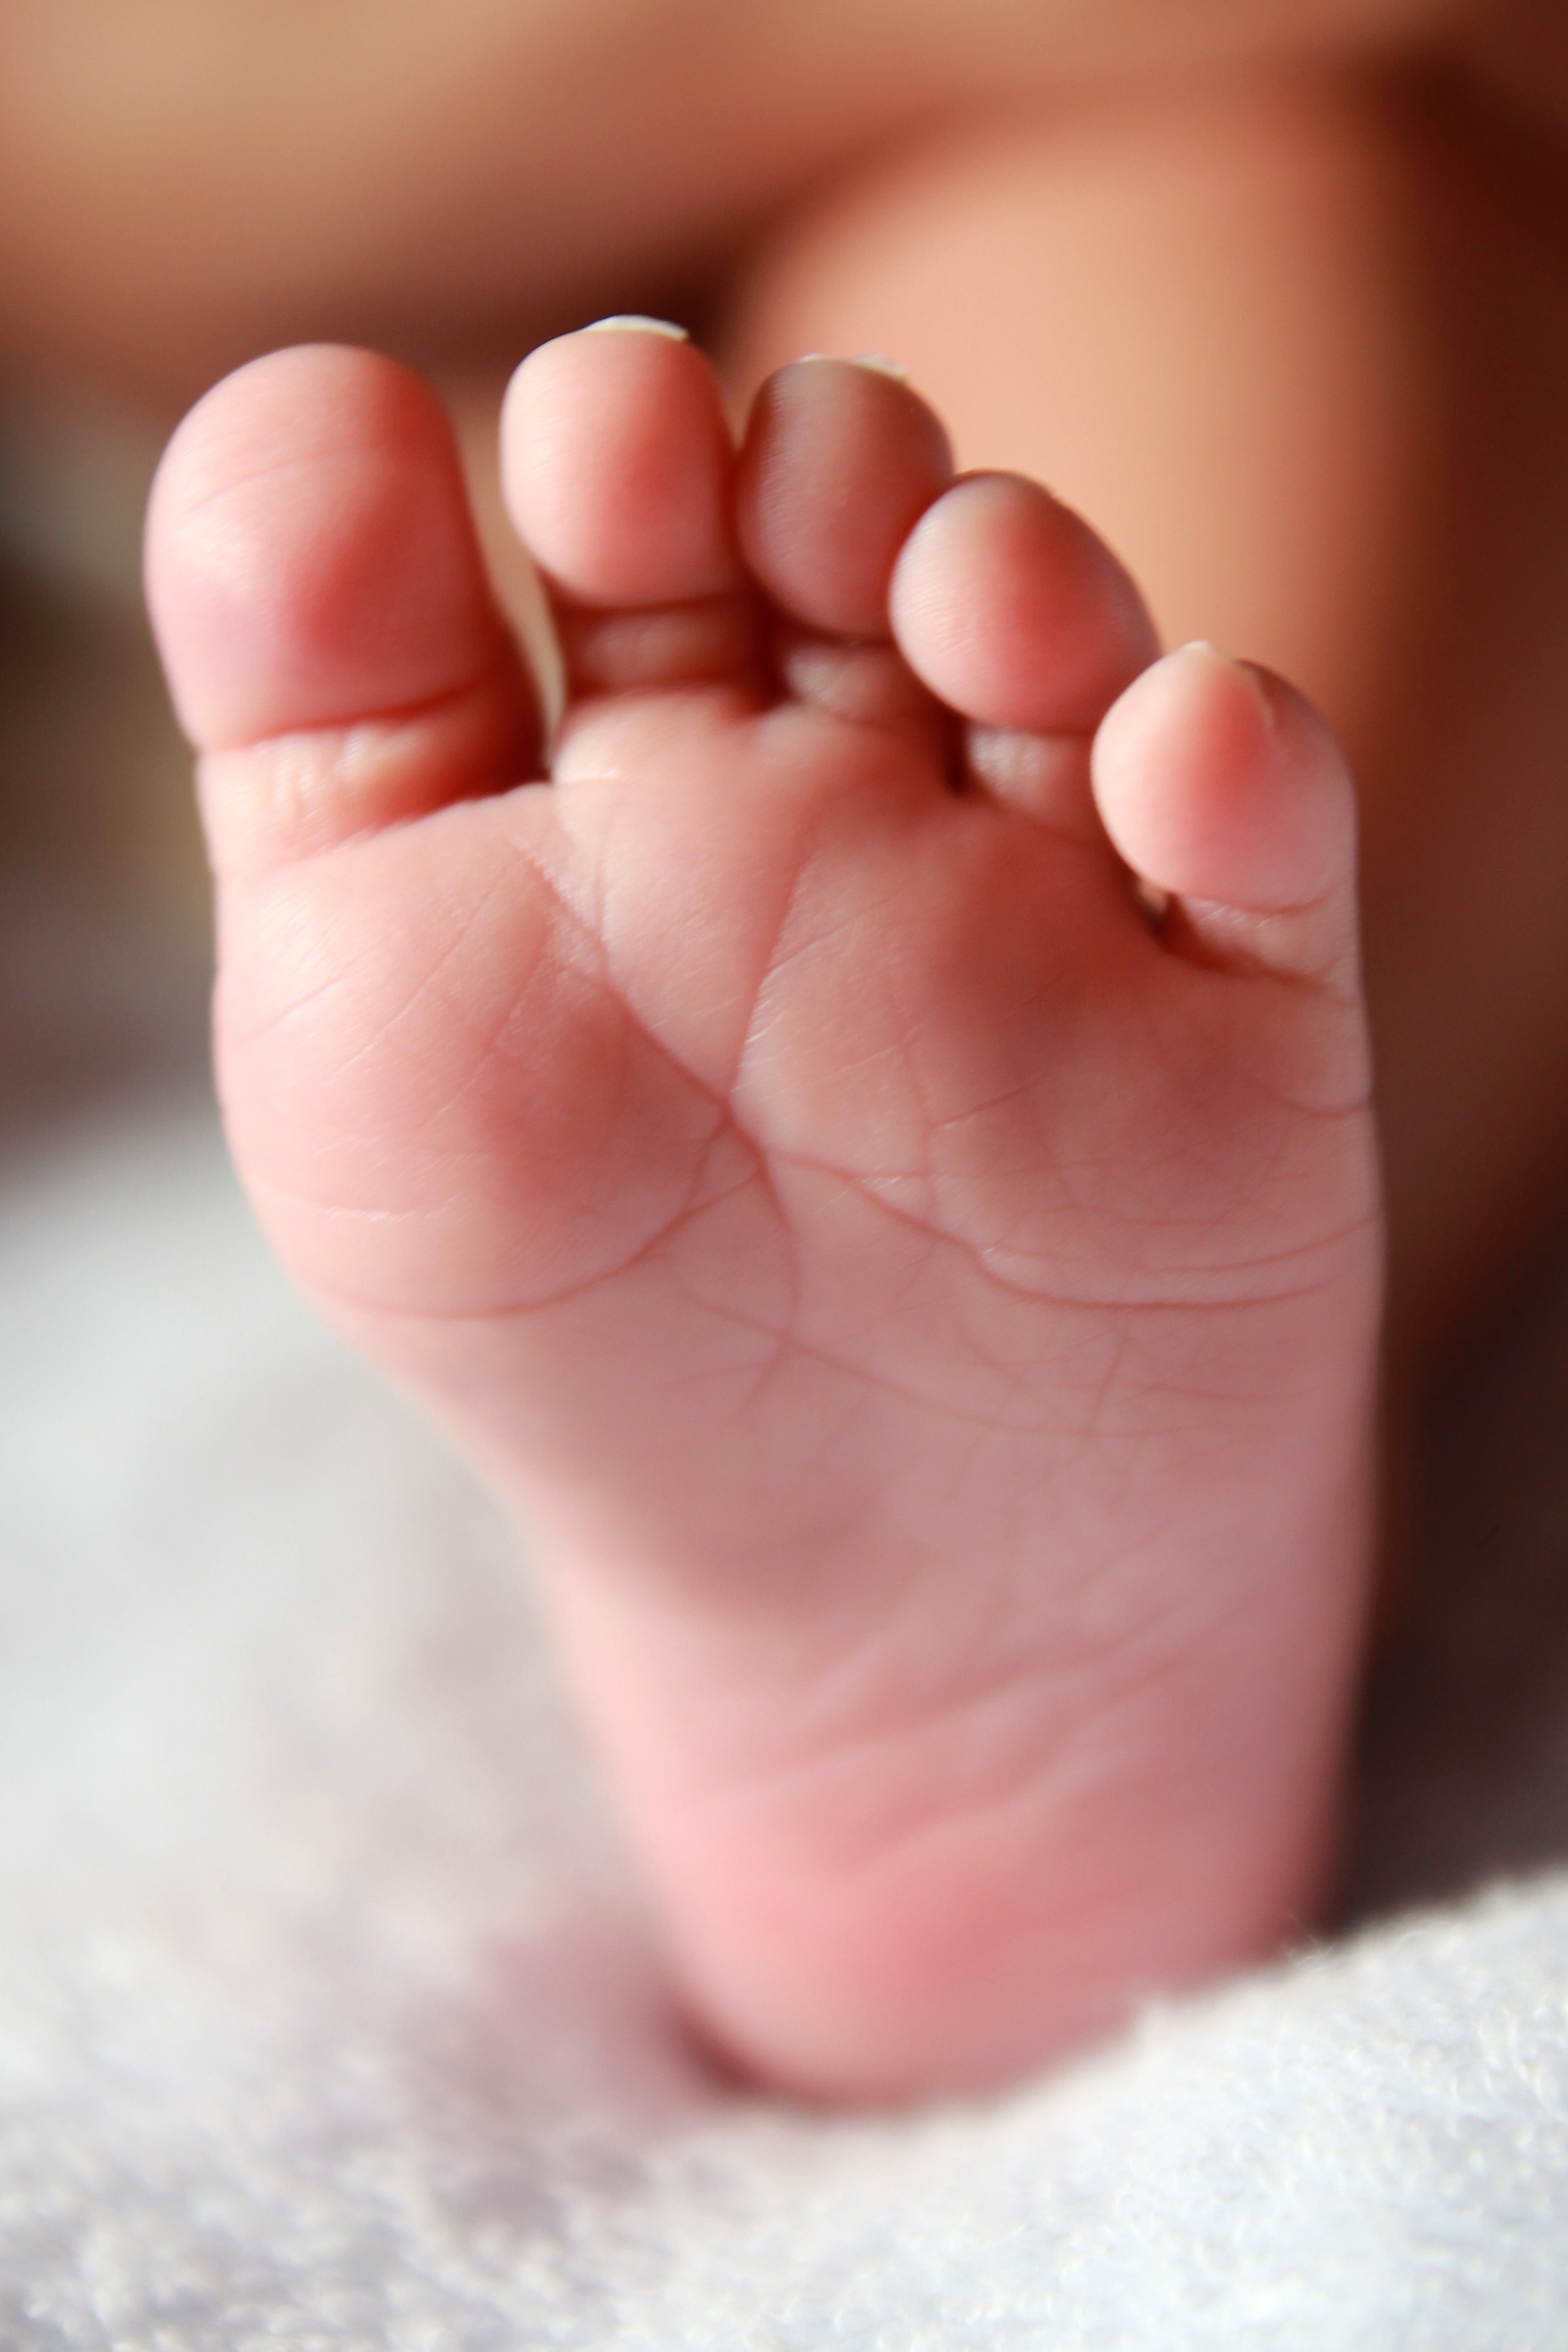 Newborn Baby Foot Leg Child Human Image